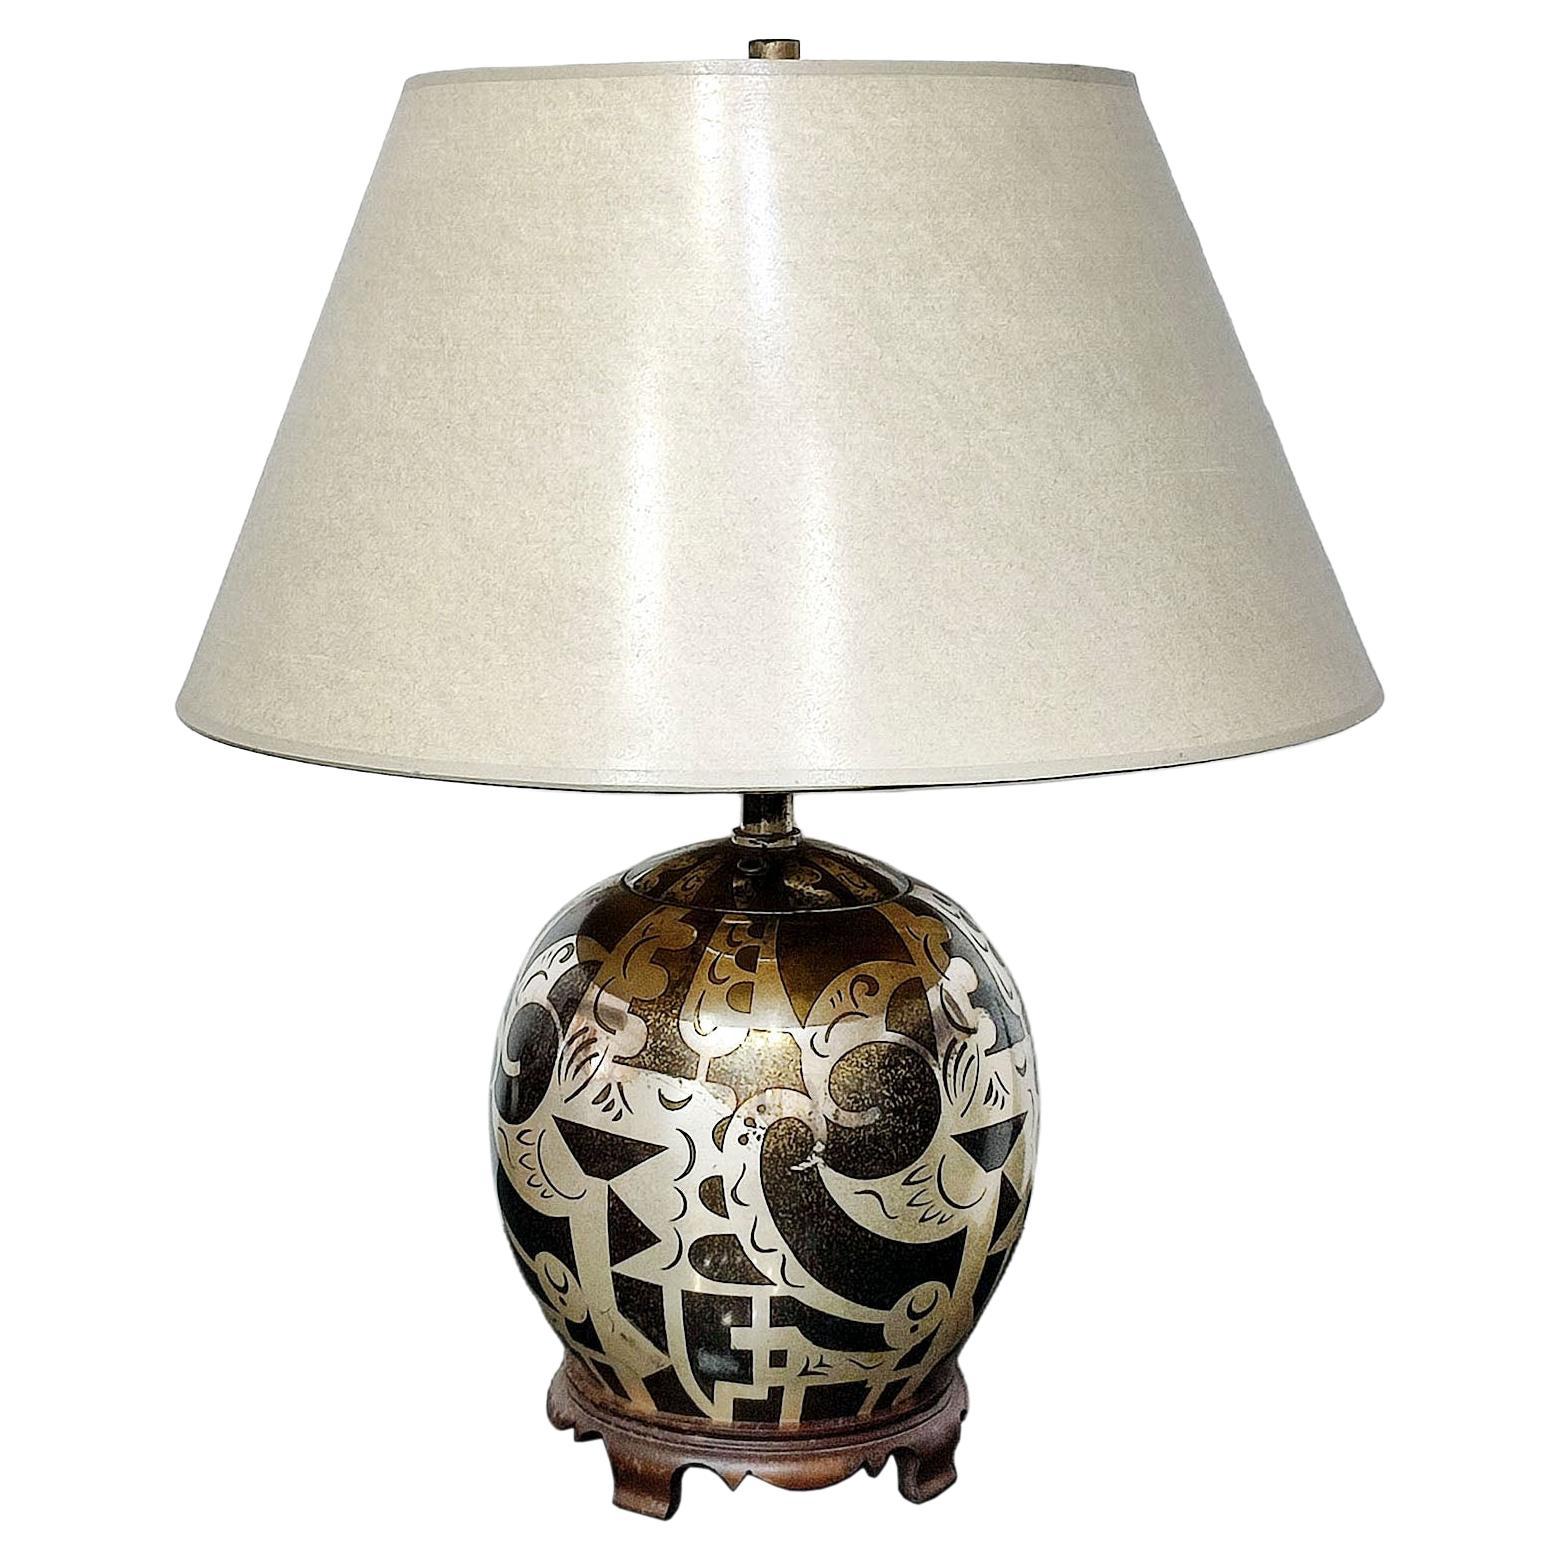 Art Deco WMF Ikora Paul Haustein "Congo" Table Lamp For Sale